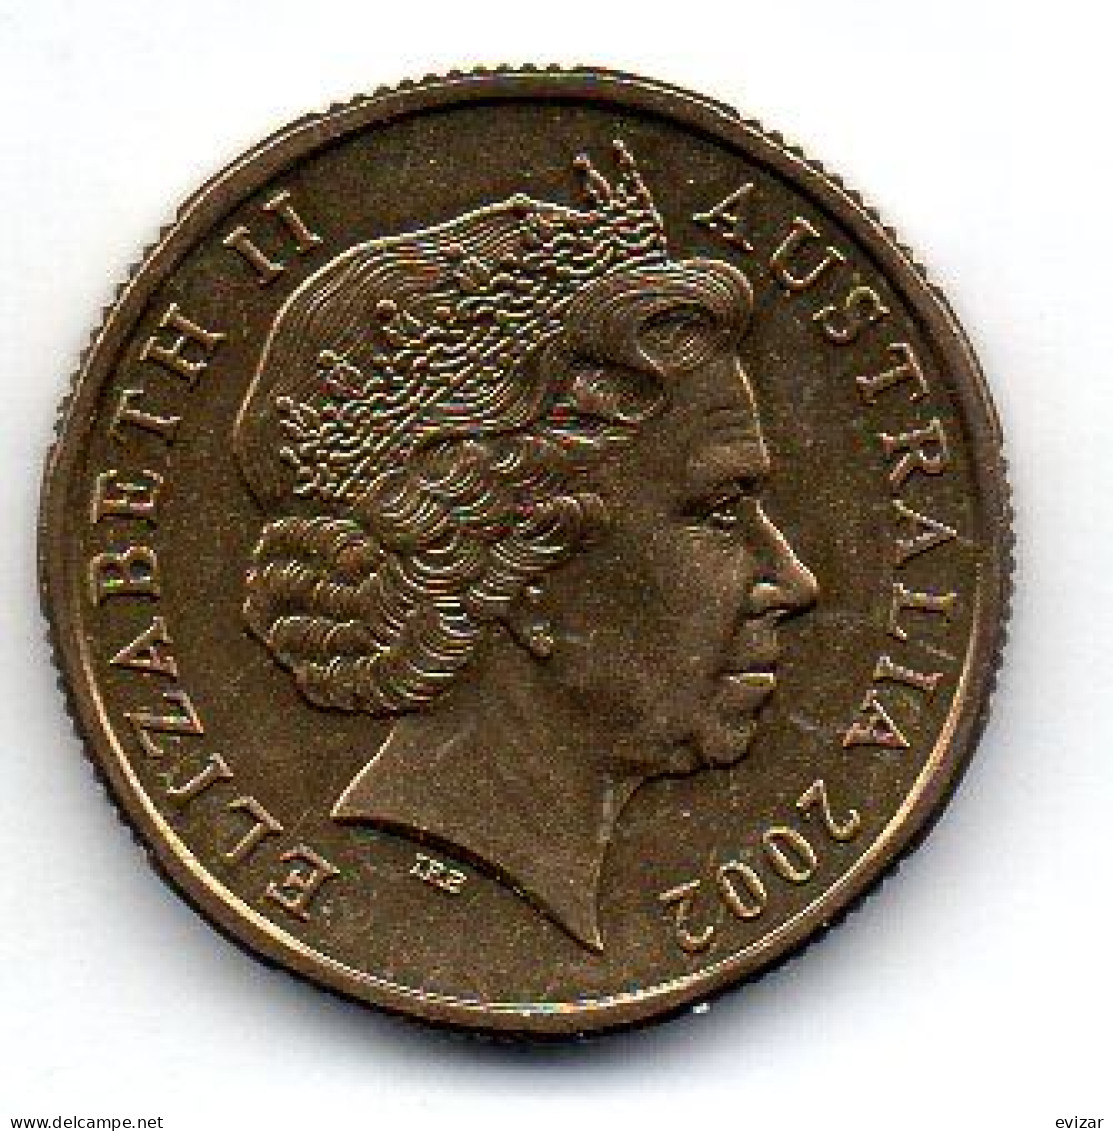 AUSTRALIA, 1 Dollar, Aluminum-Bronze, Year 2002-C, KM # 600 - Dollar